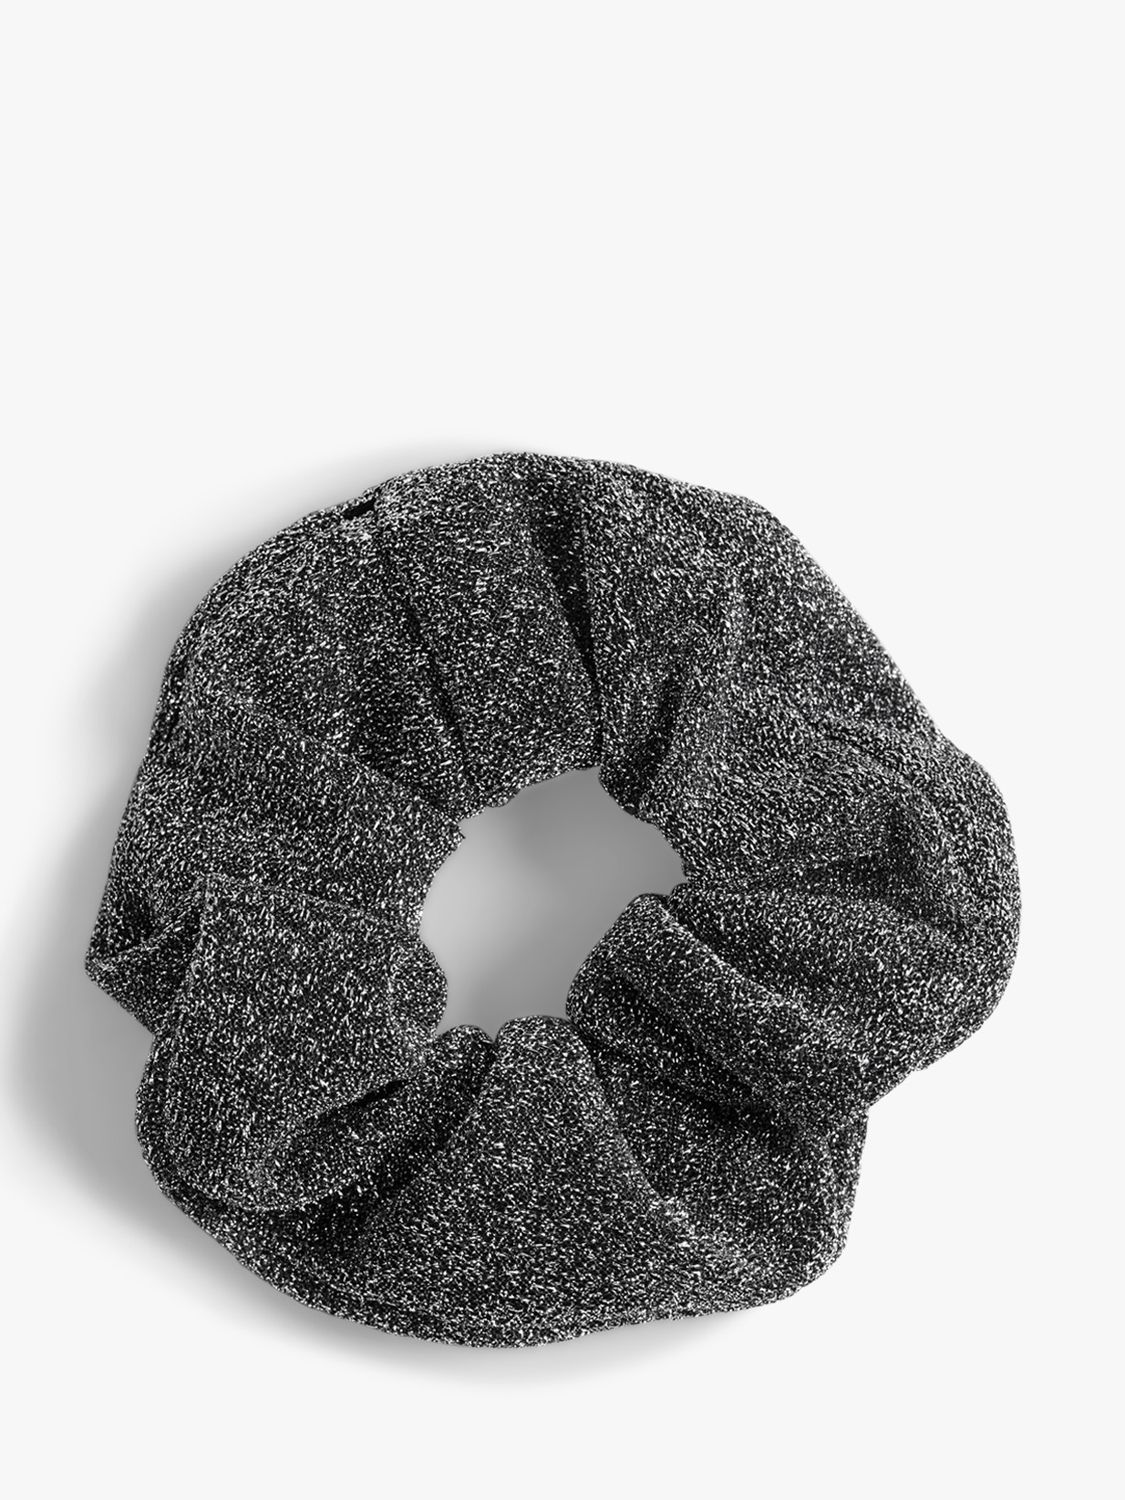 HUSH Orly Lurex Scrunchie, Black/Silver, One Size